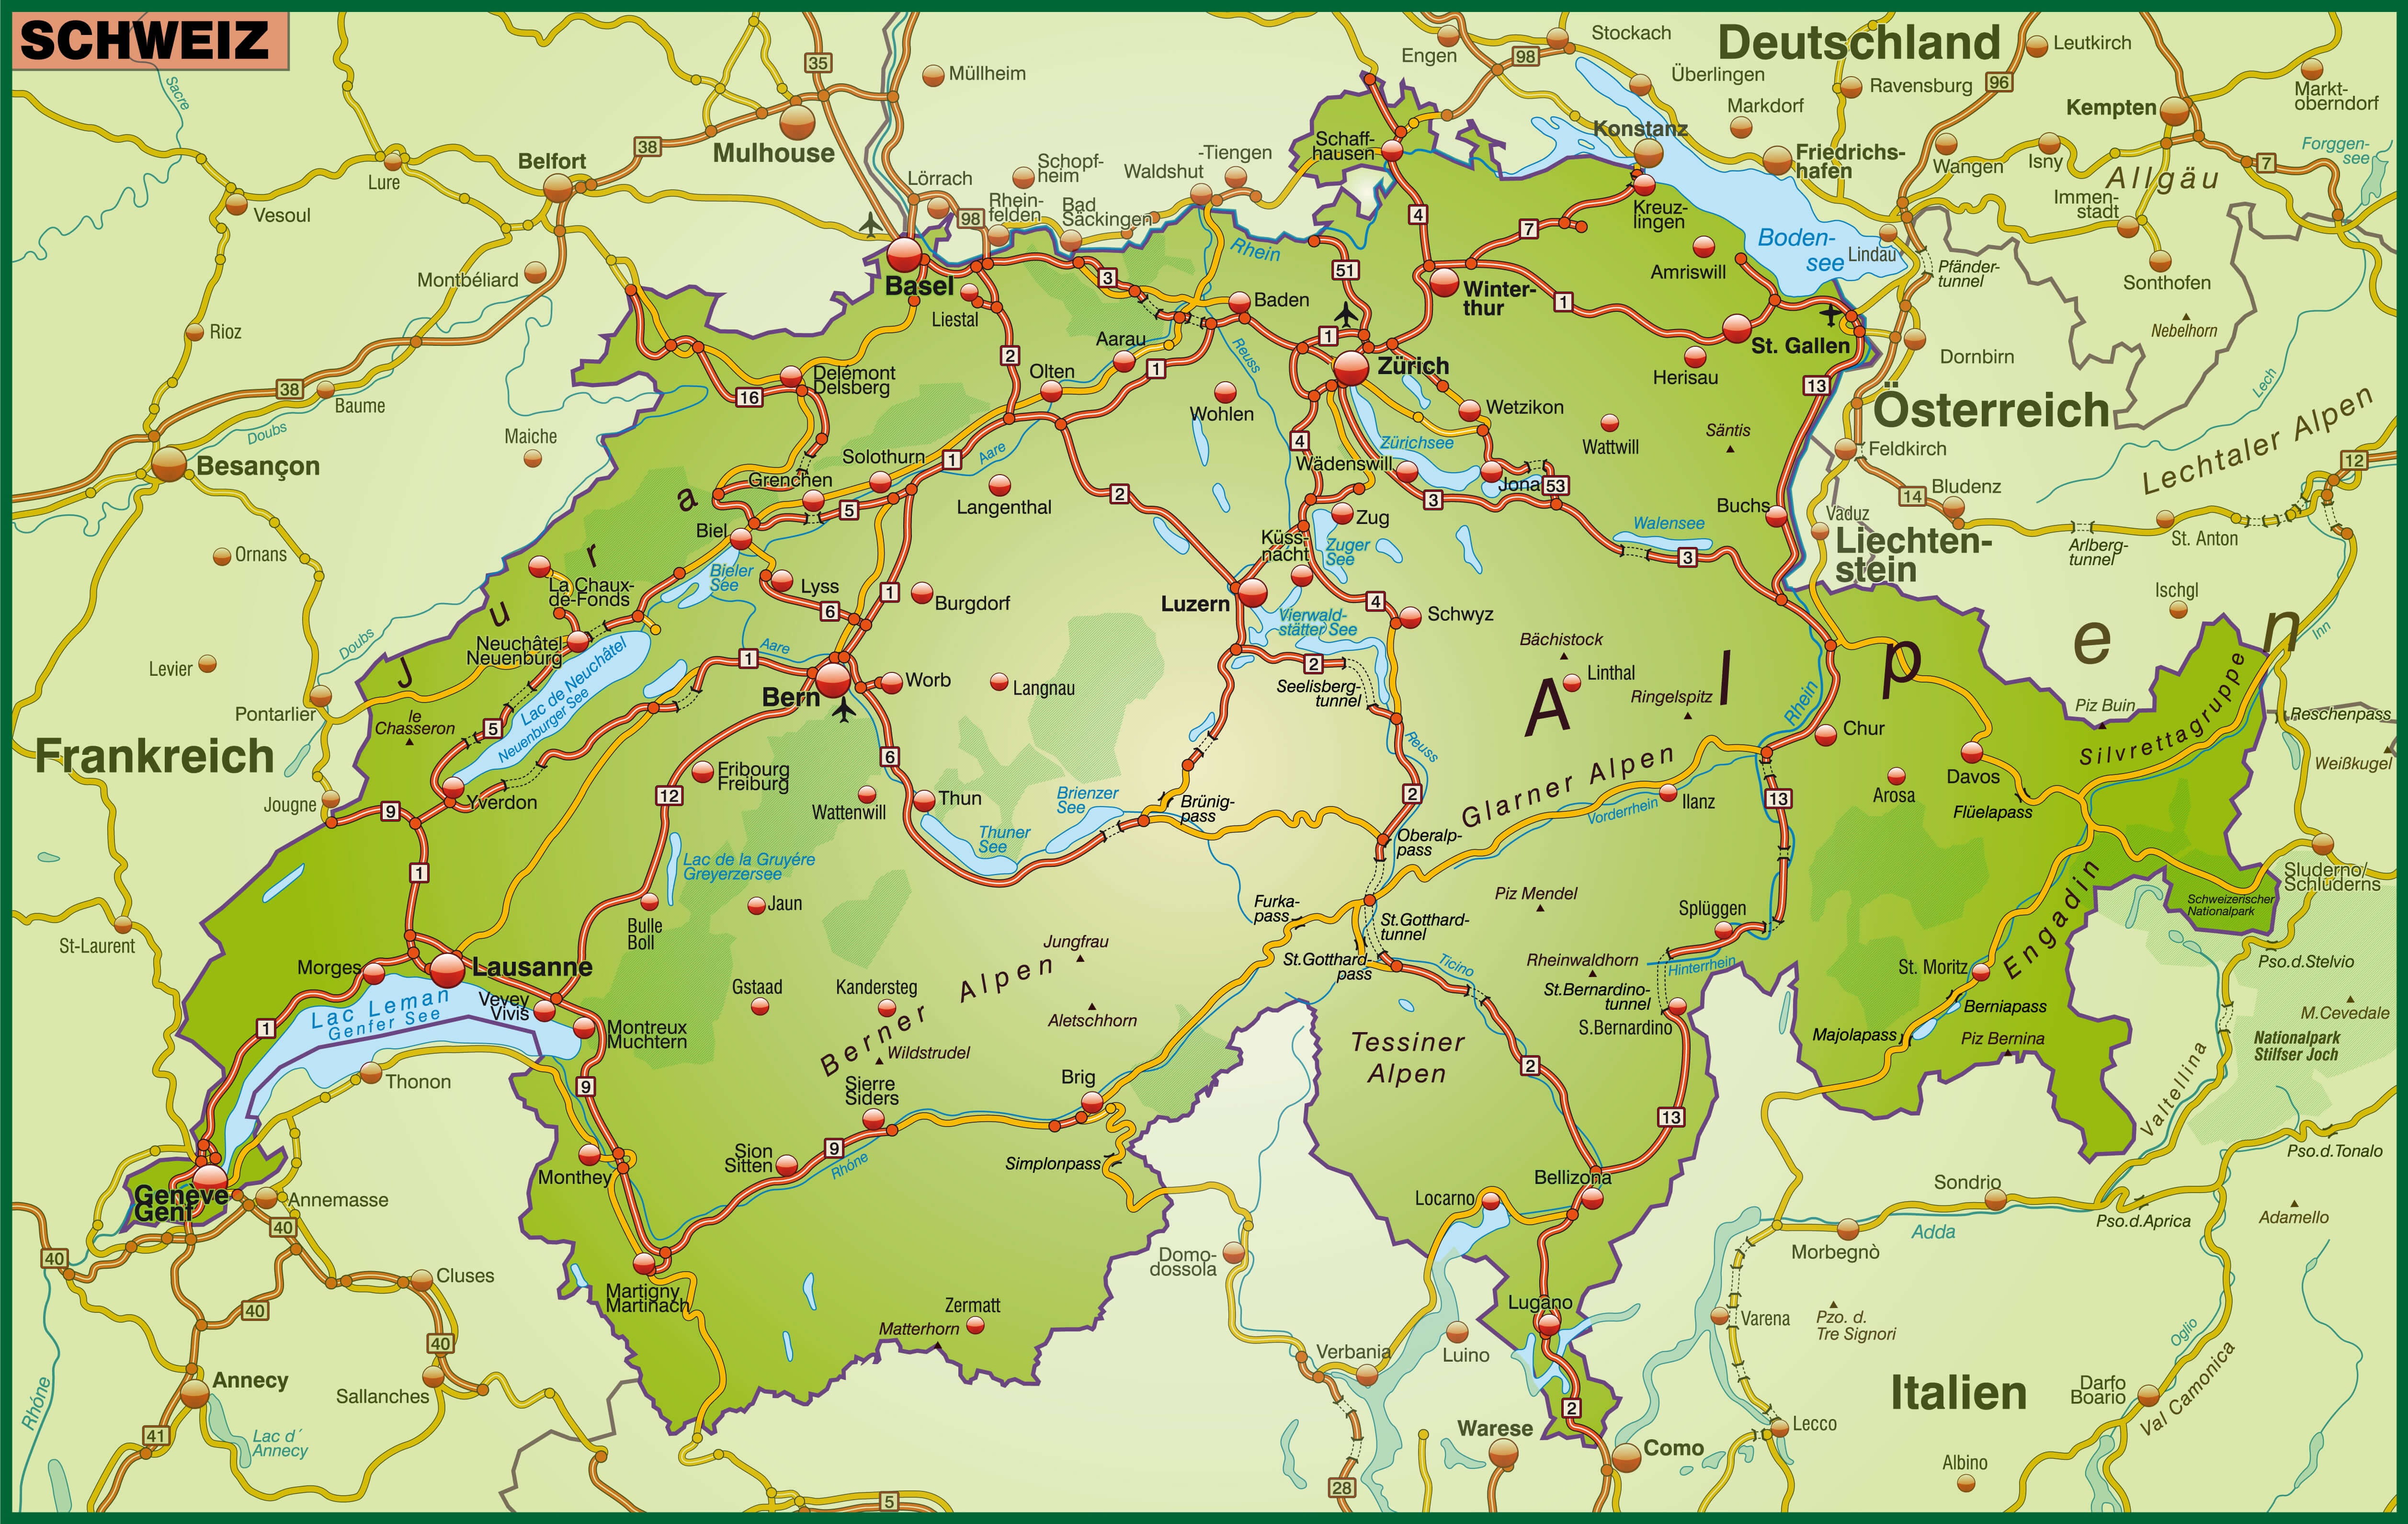 Map of Switzerland with Highways